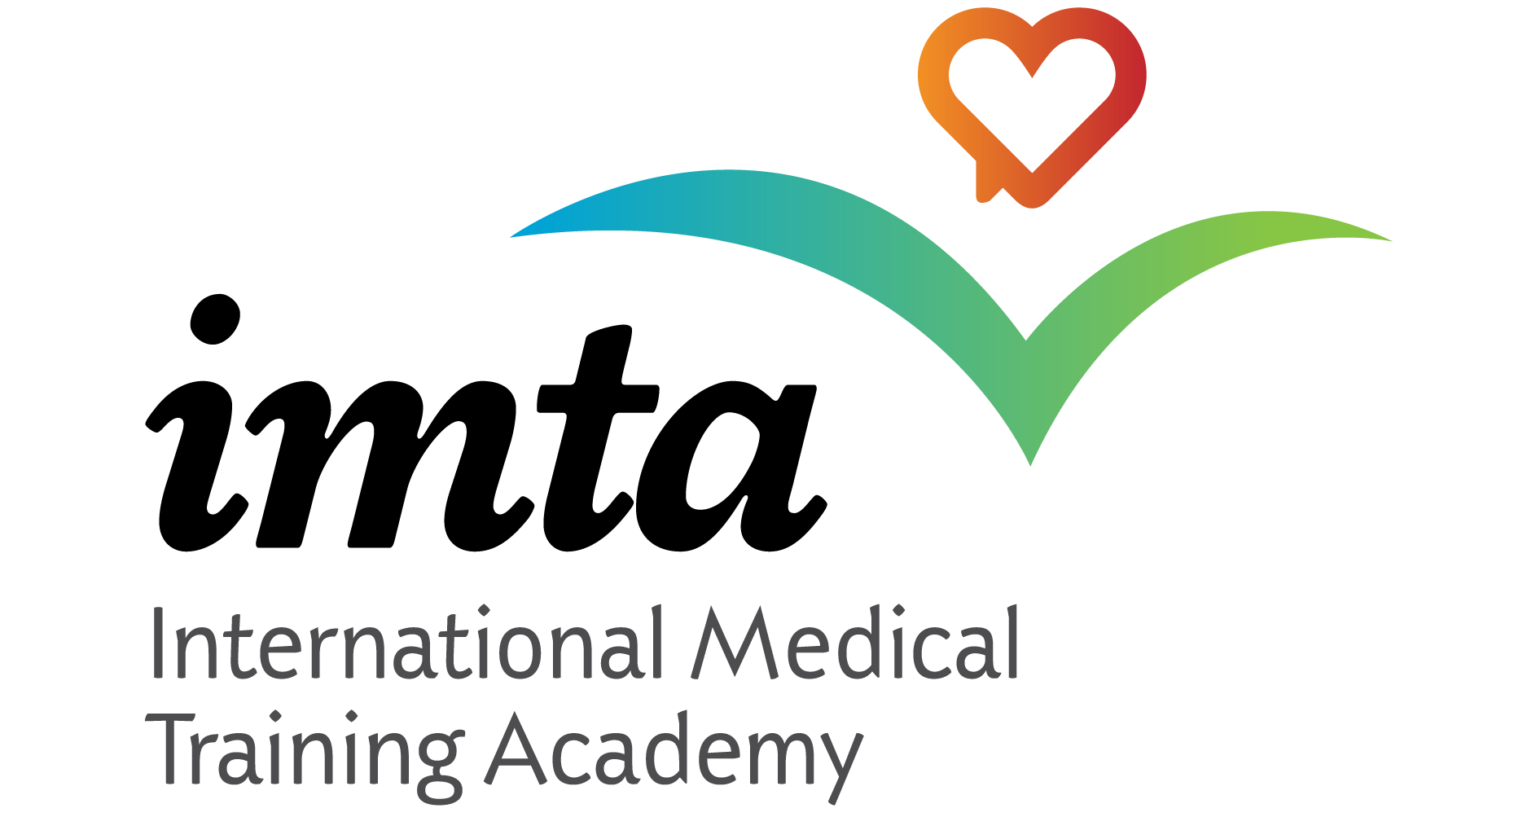 International Medical Training Academy logo